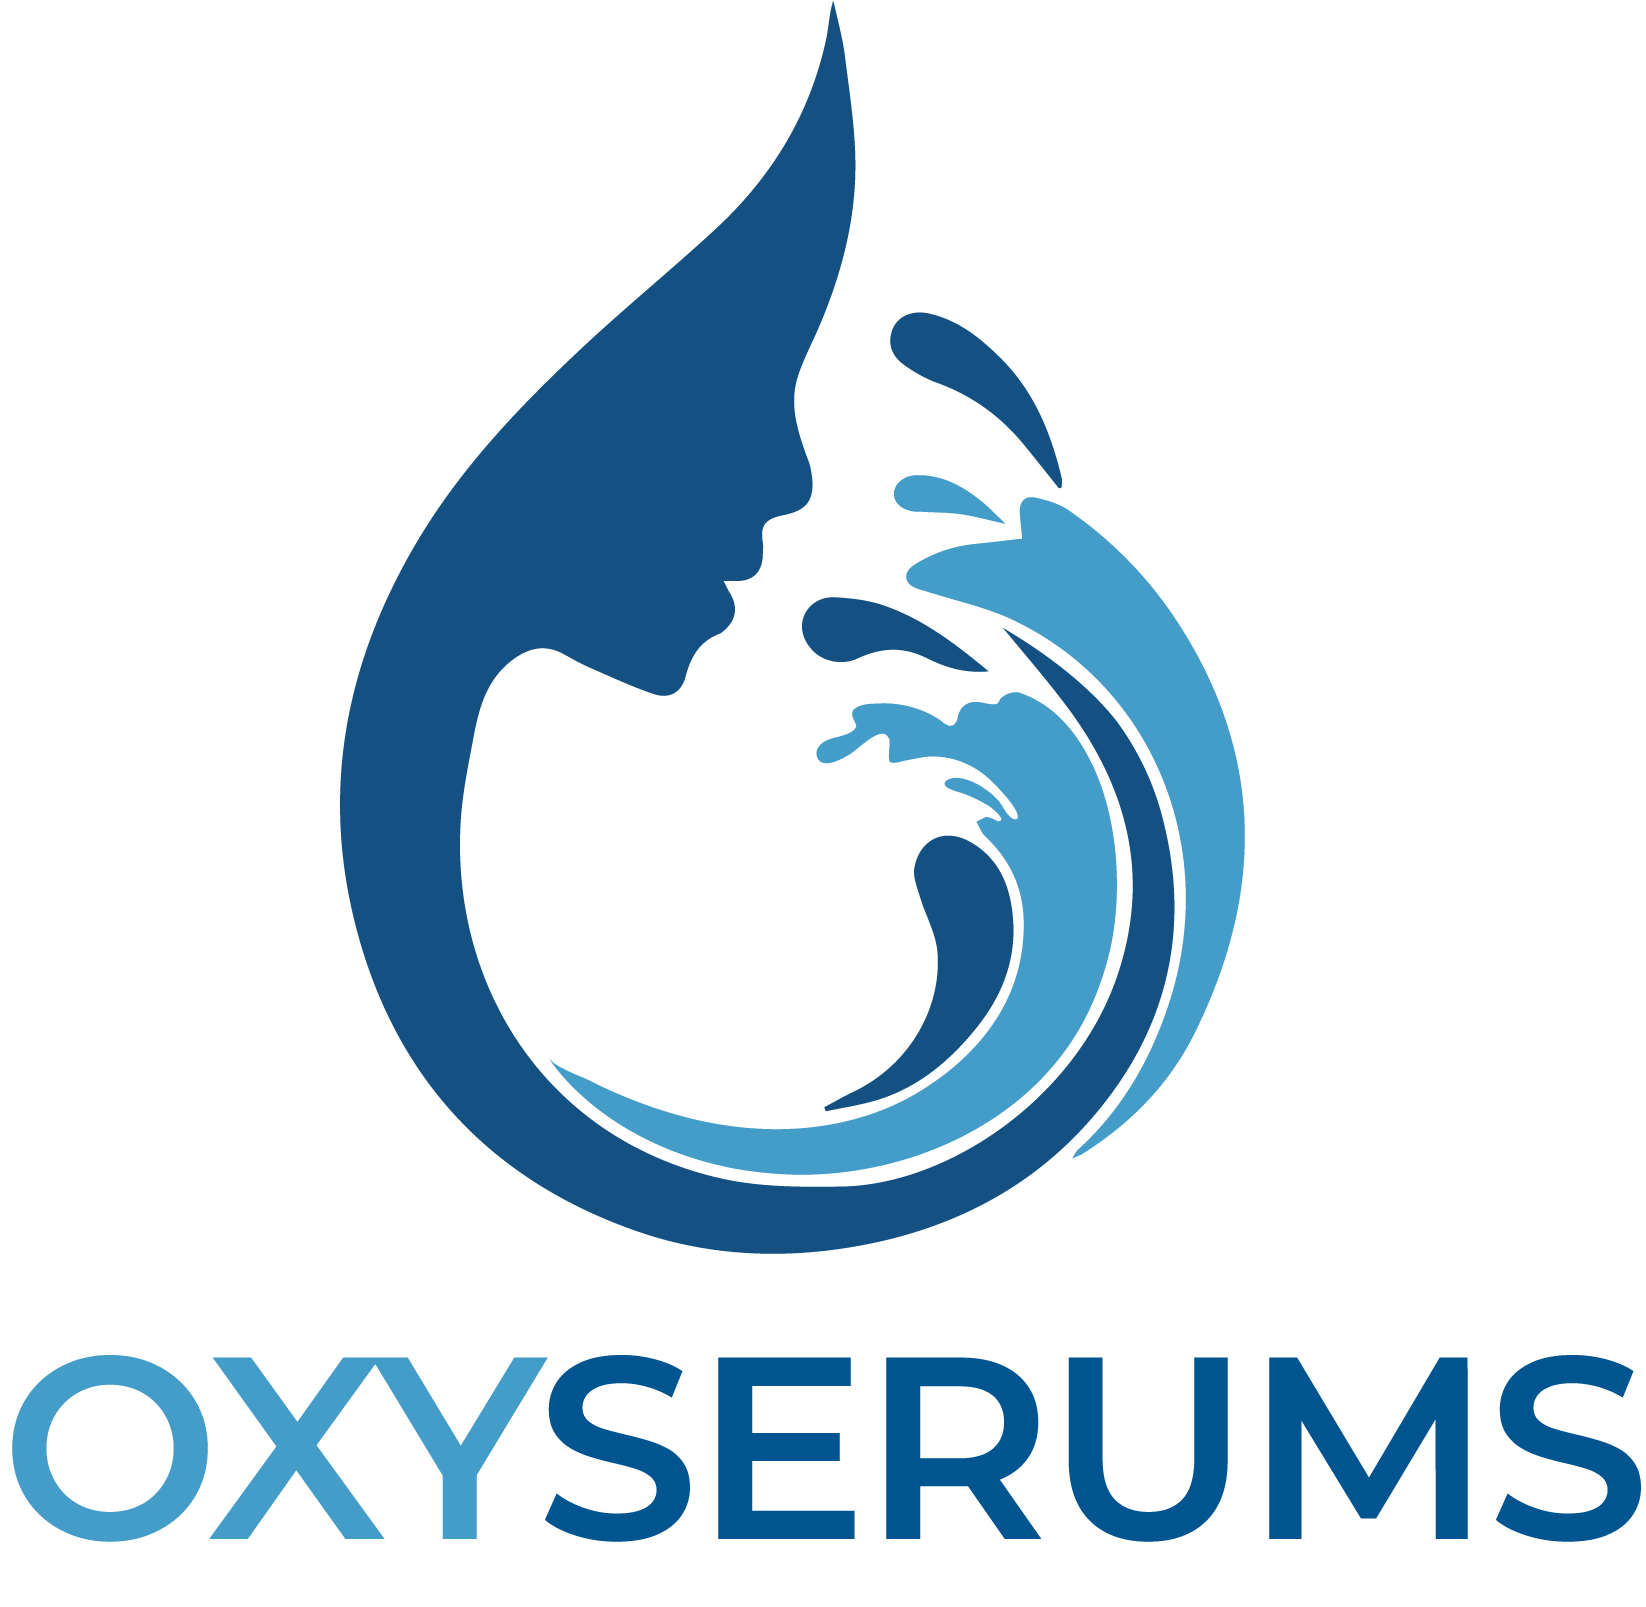 Oxyserums